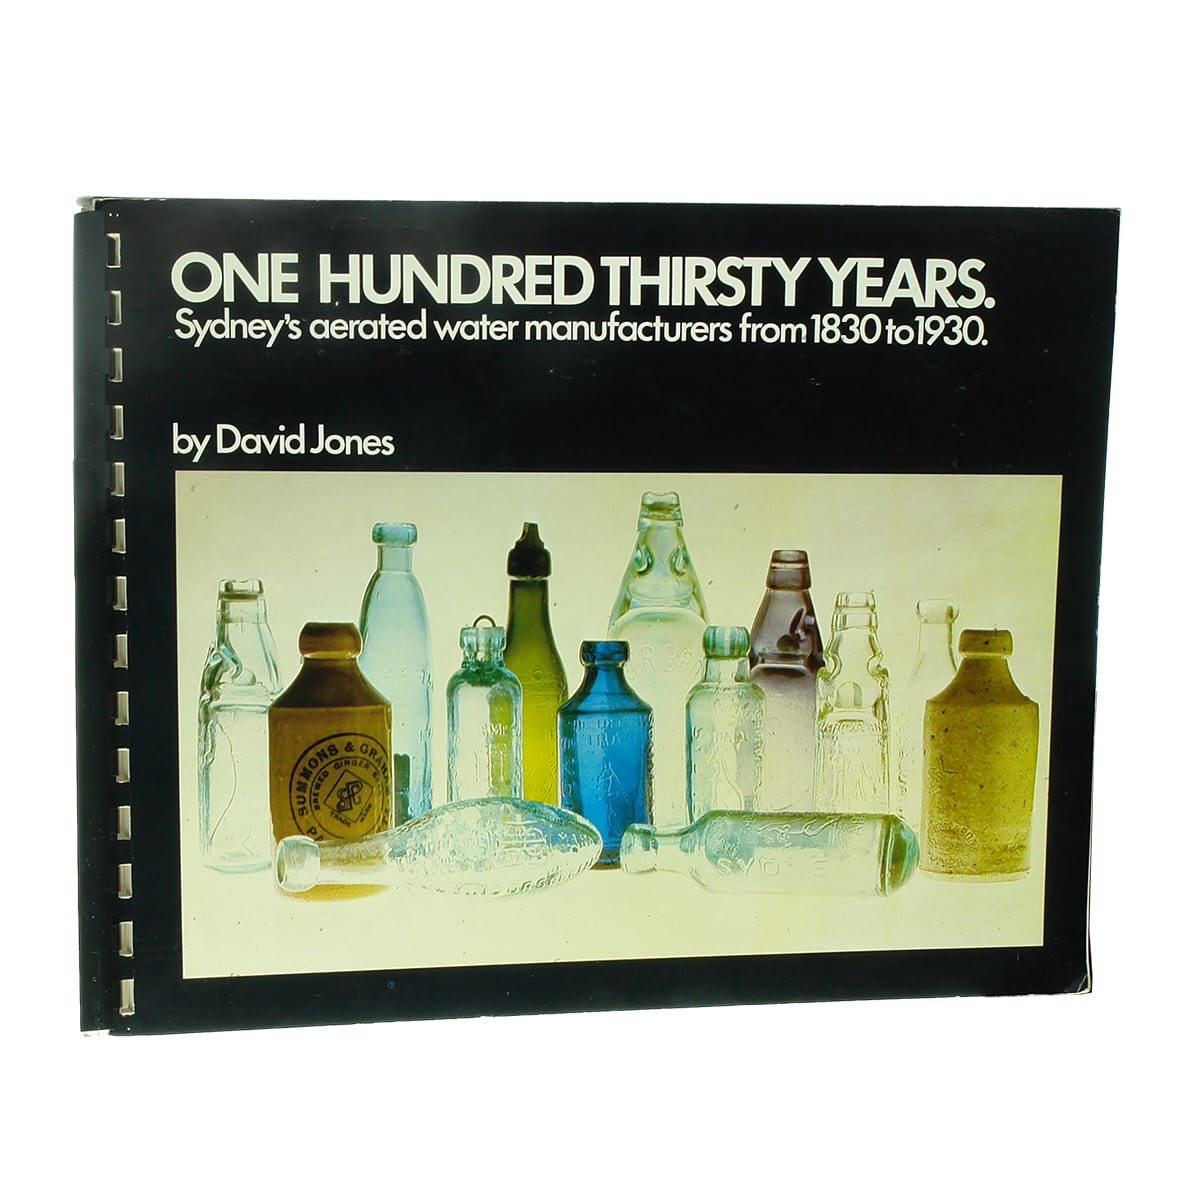 One Hundred Thirsty Years, by David Jones.